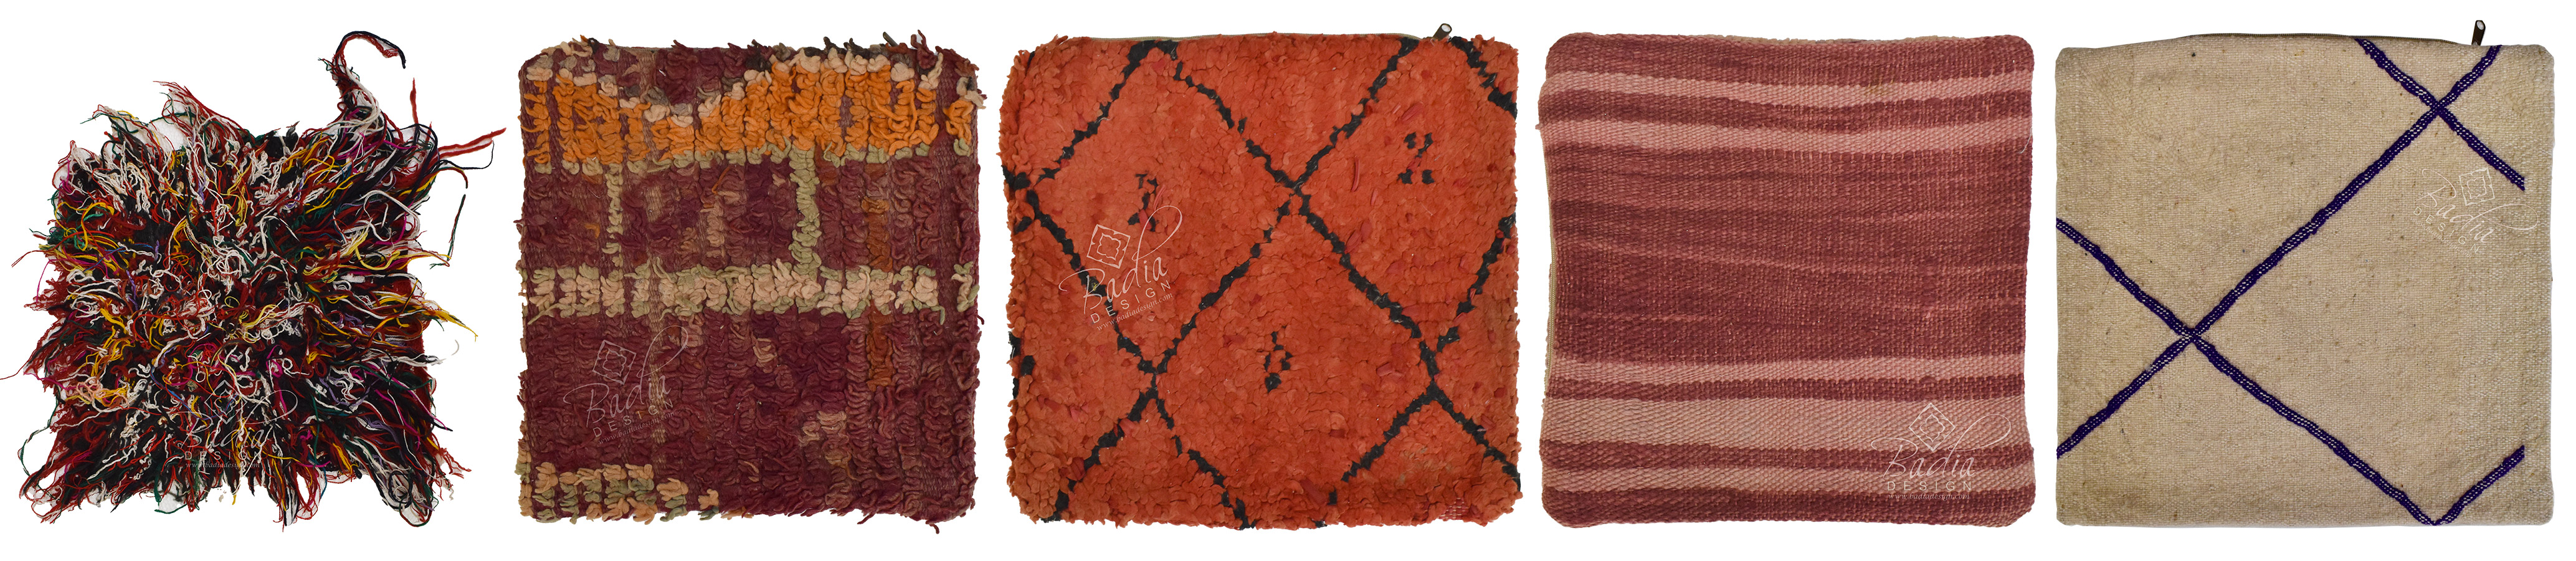 moroccan-traditional-handmade-kilim-pillows-fp719.jpg